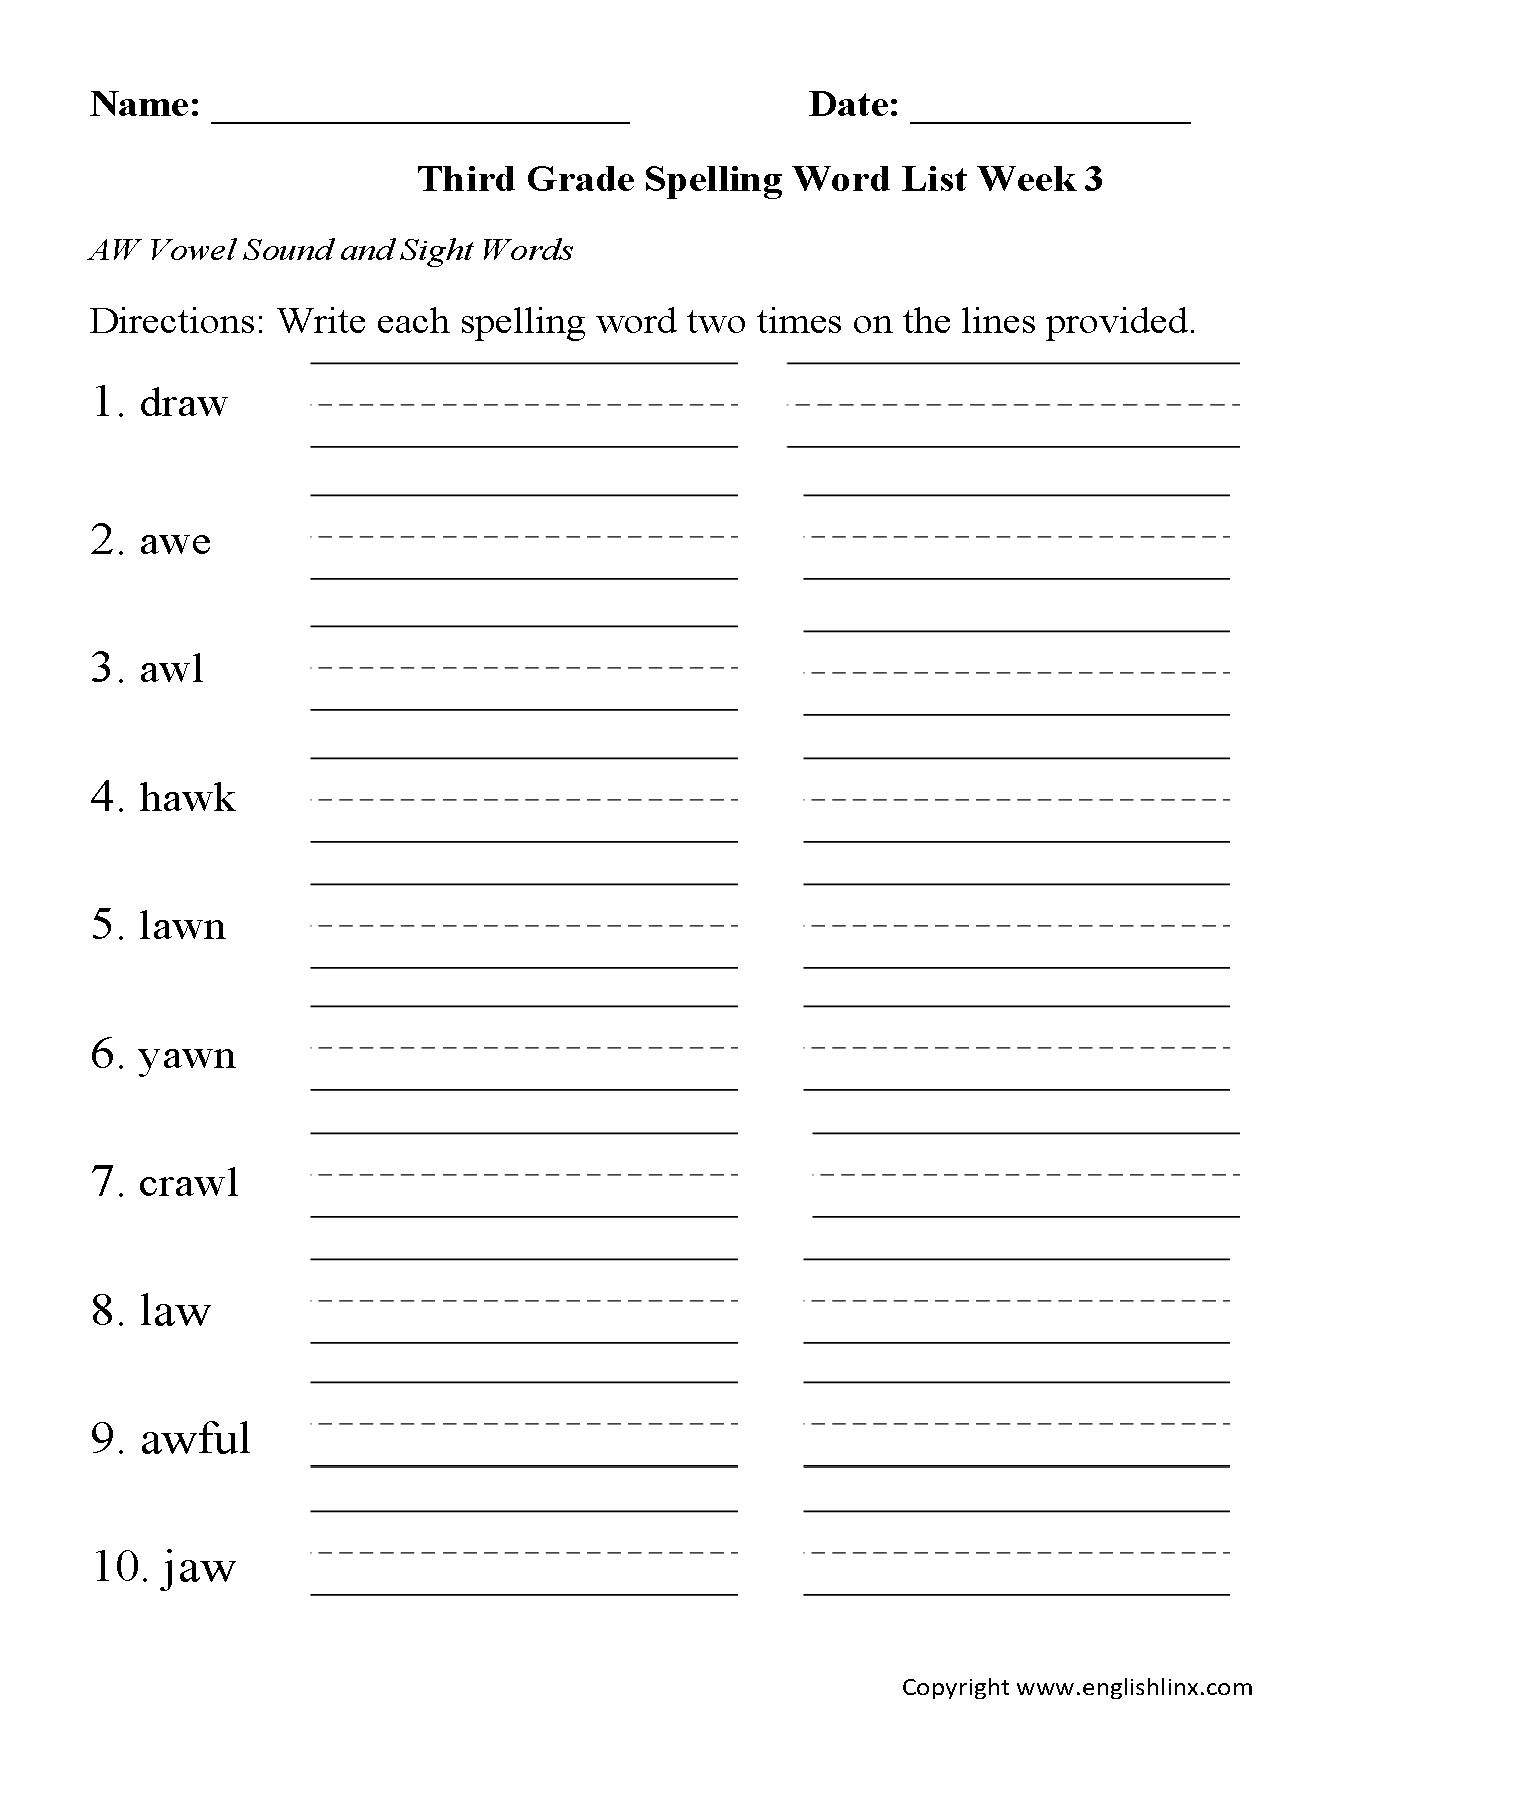 Spelling Worksheets | Third Grade Spelling Worksheets | Free Printable Grade 3 Spelling Worksheets